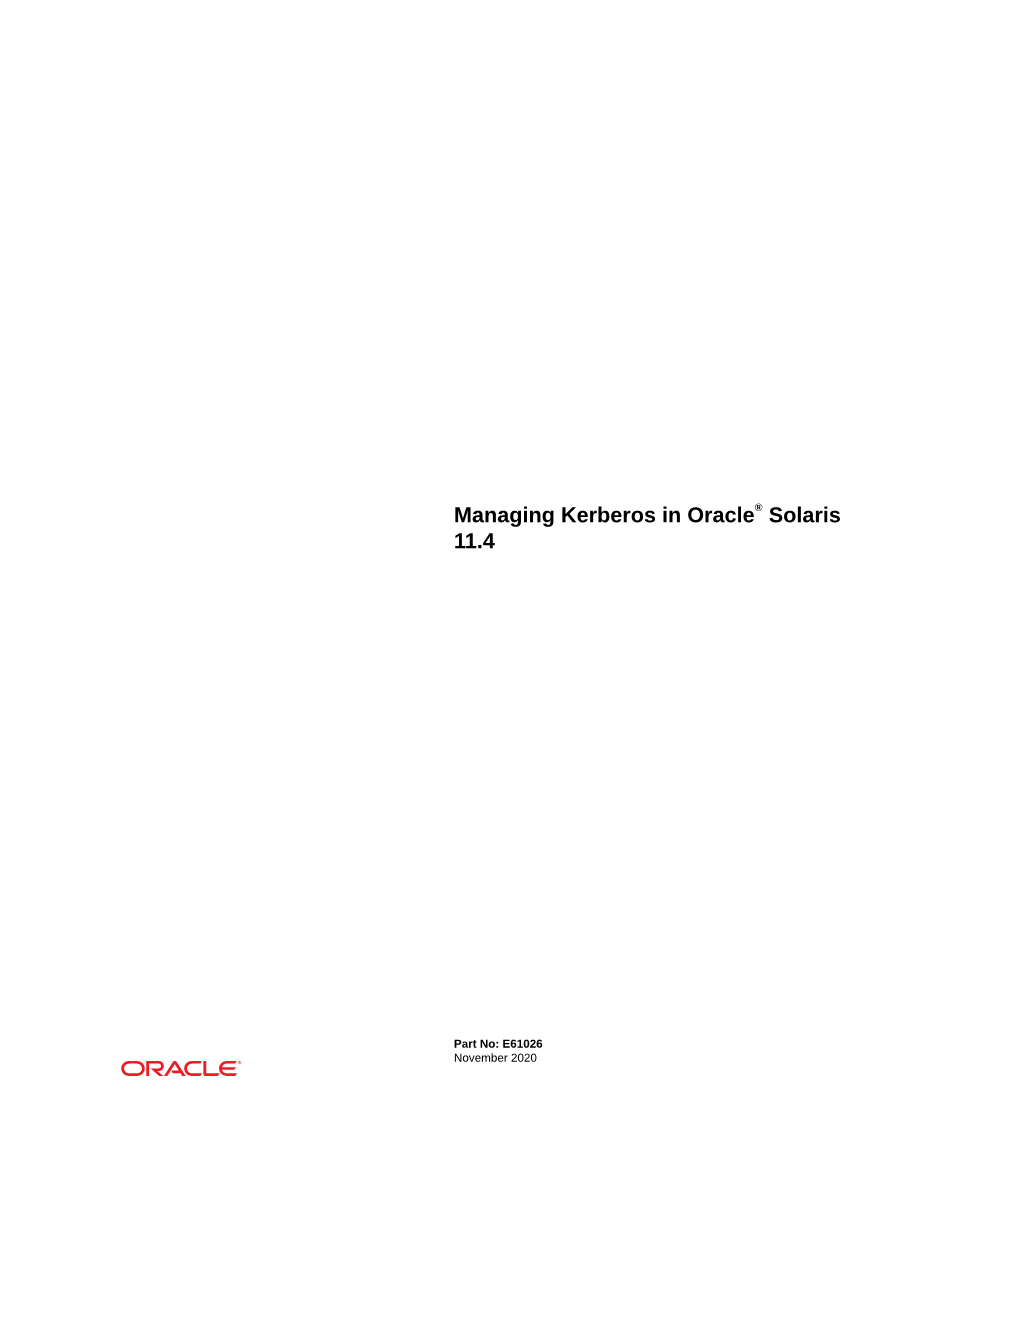 Managing Kerberos in Oracle® Solaris 11.4